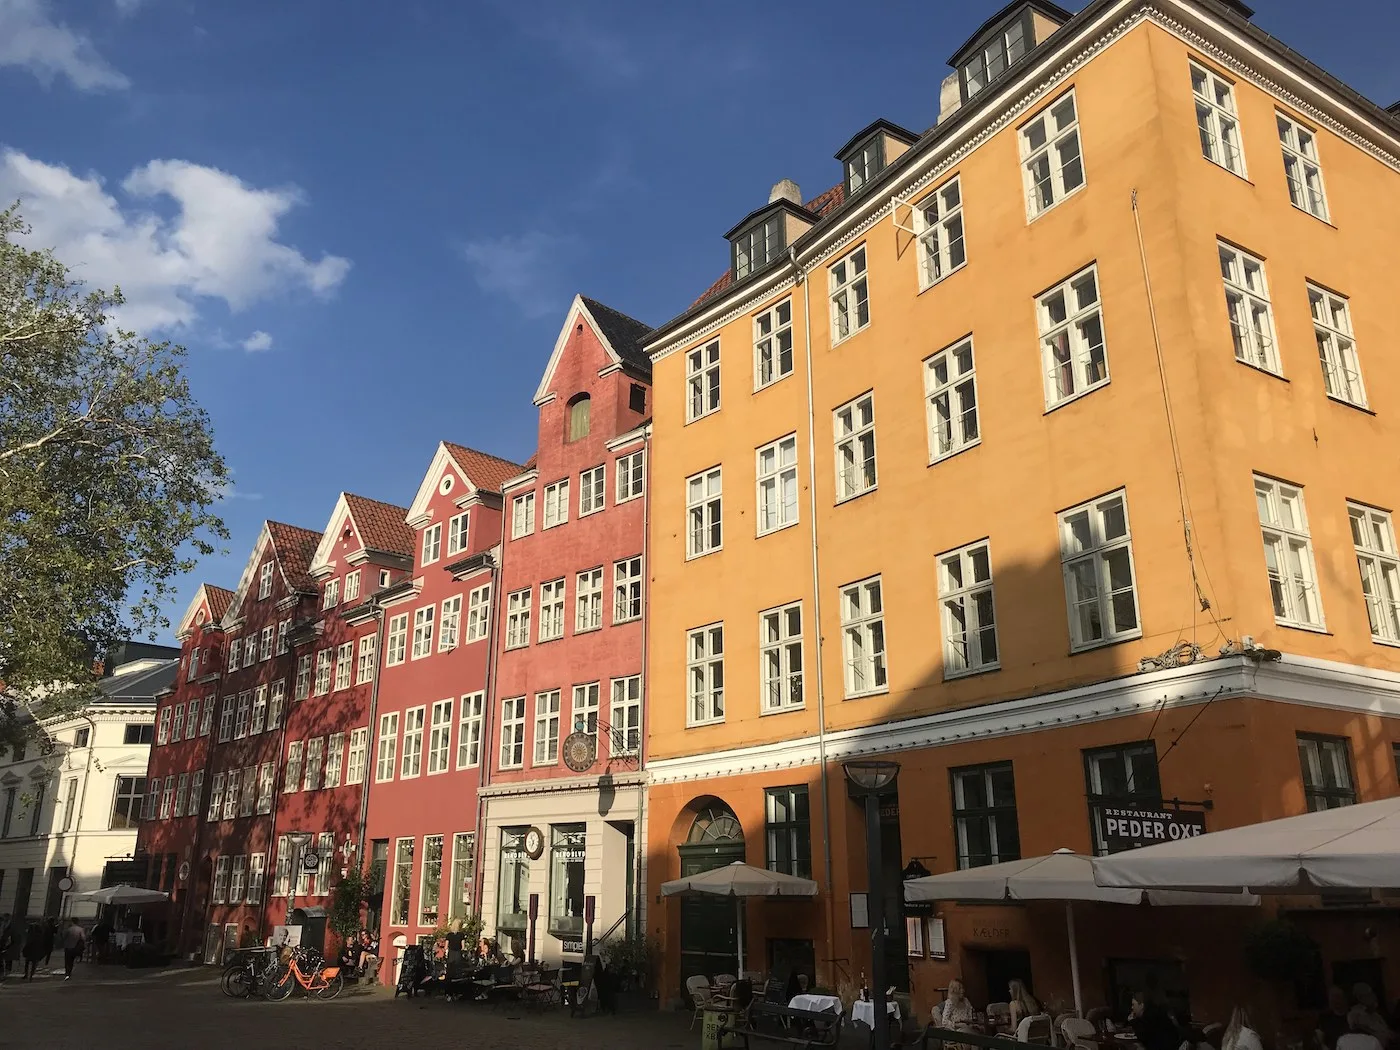 Colorful building in Stroget, Copenhagen